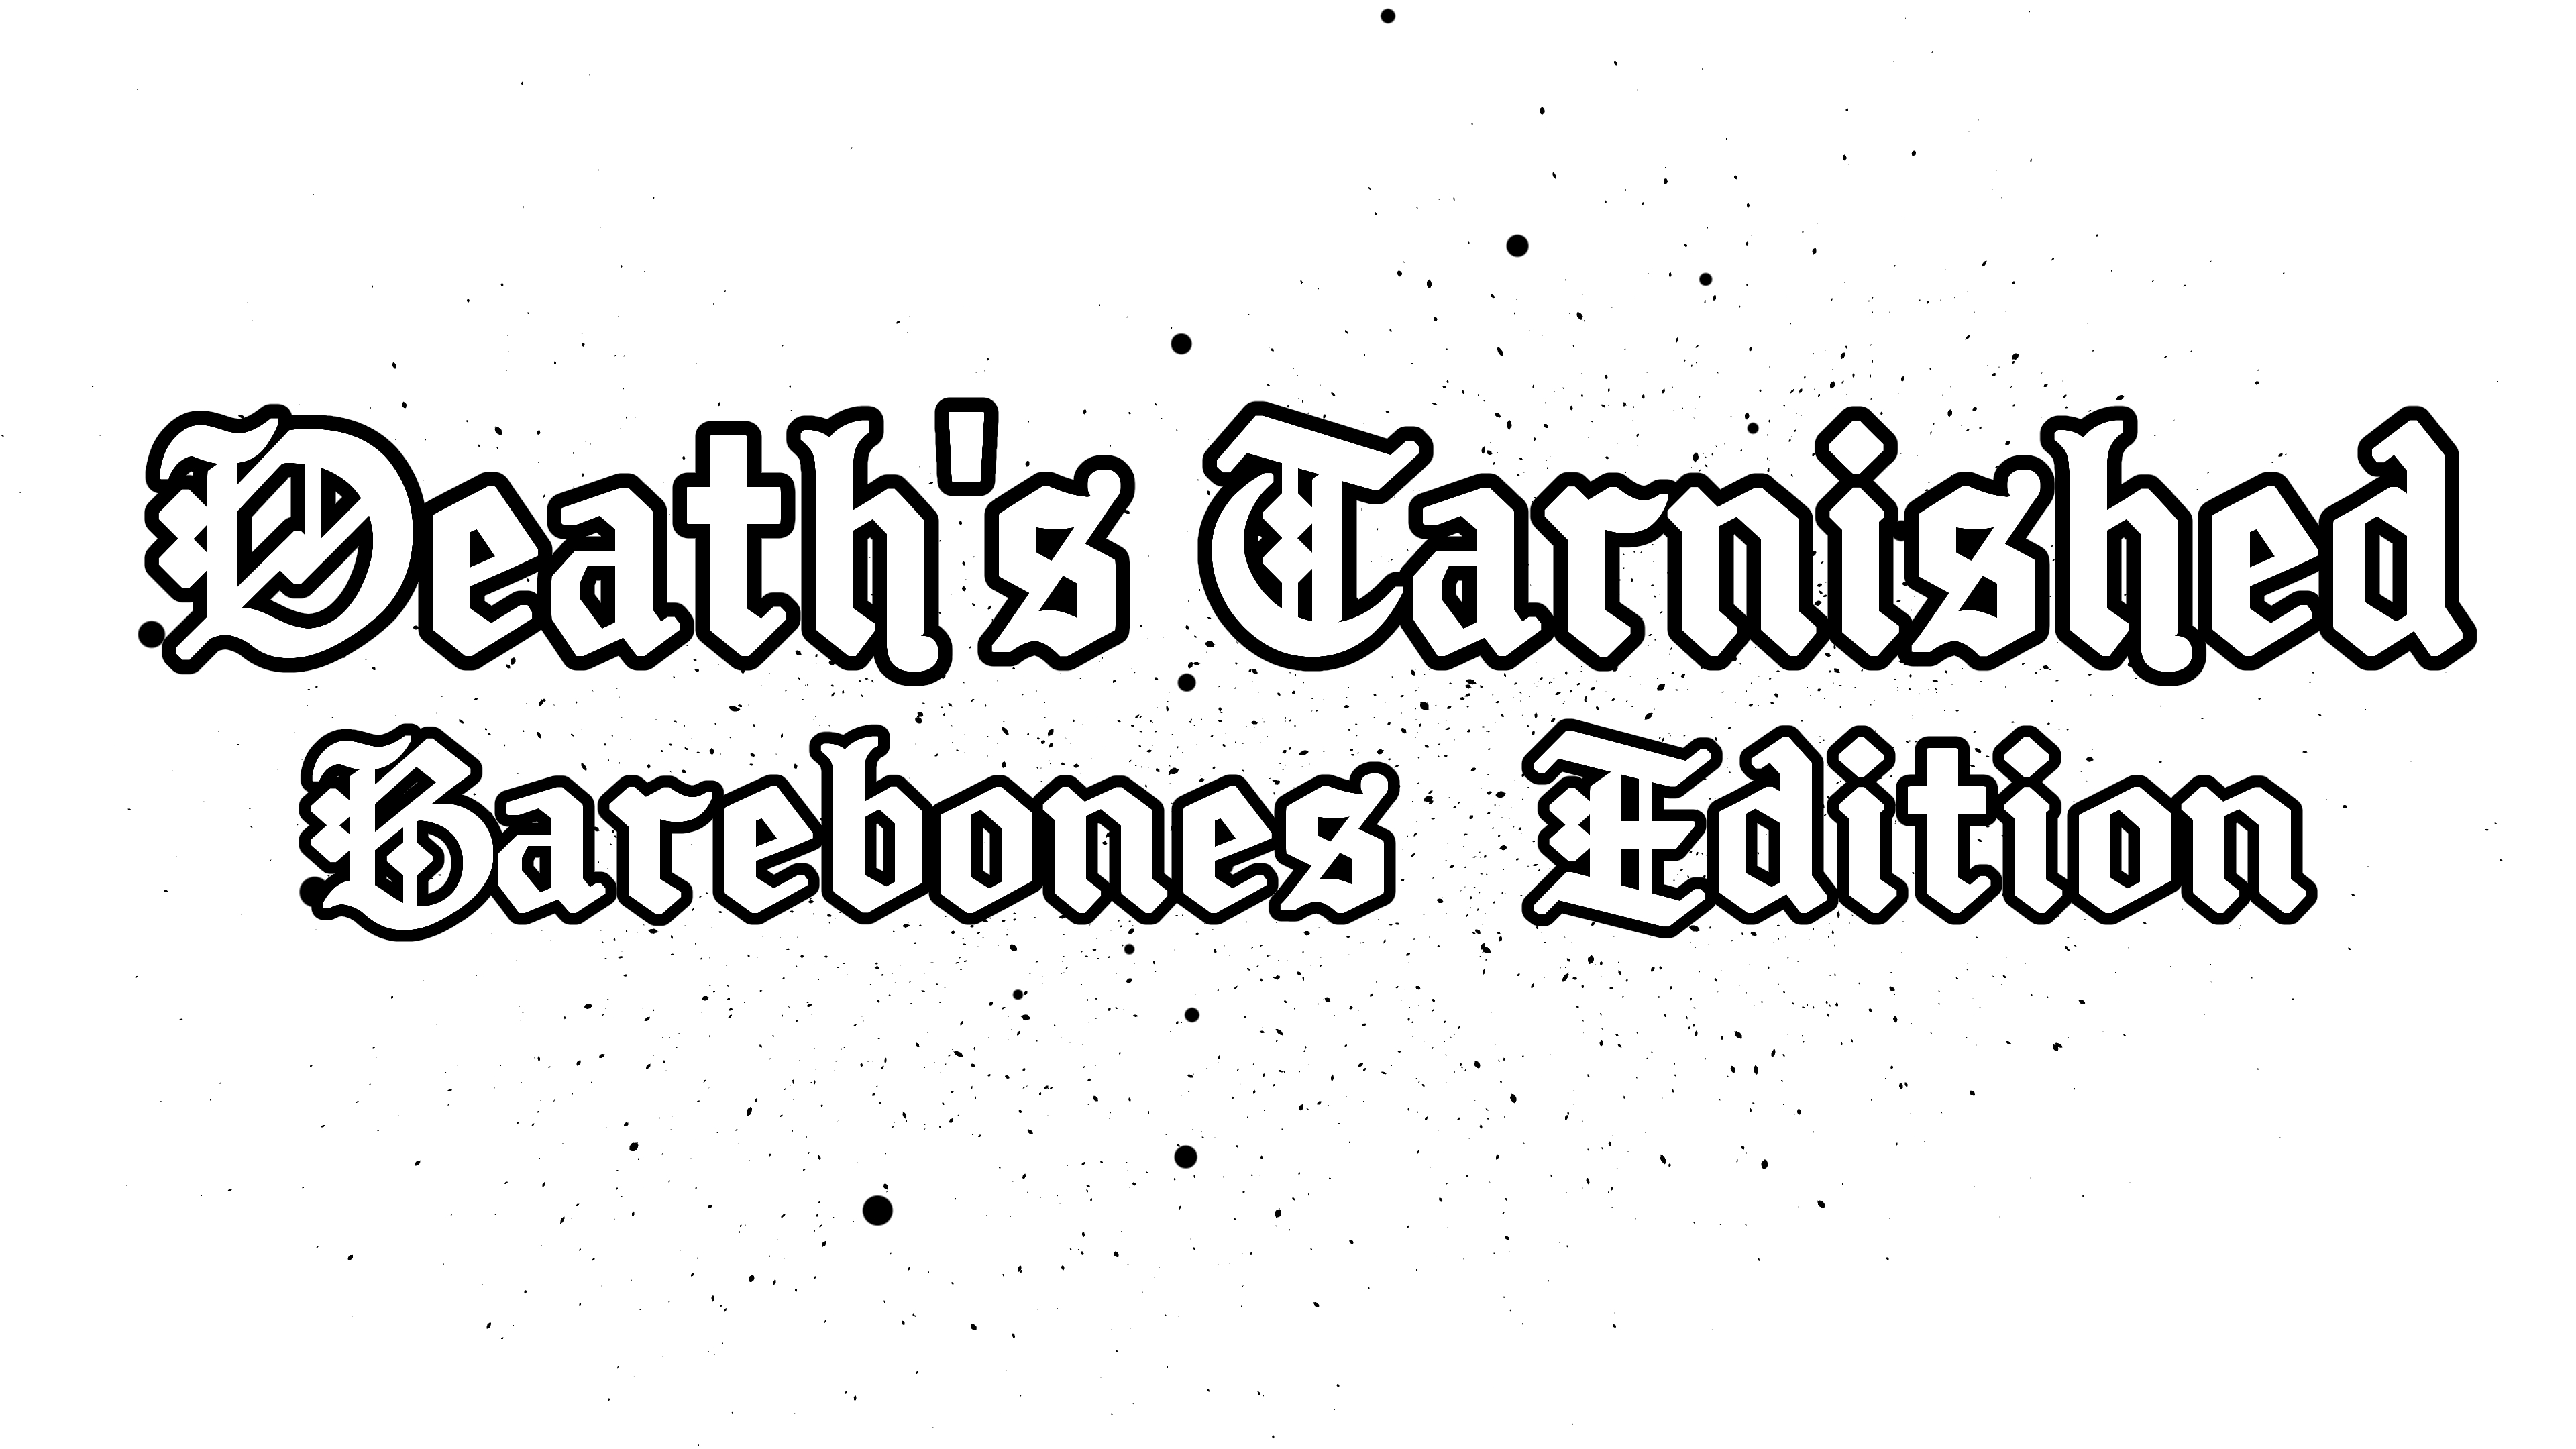 Death's Tarnished: Barebones Edition